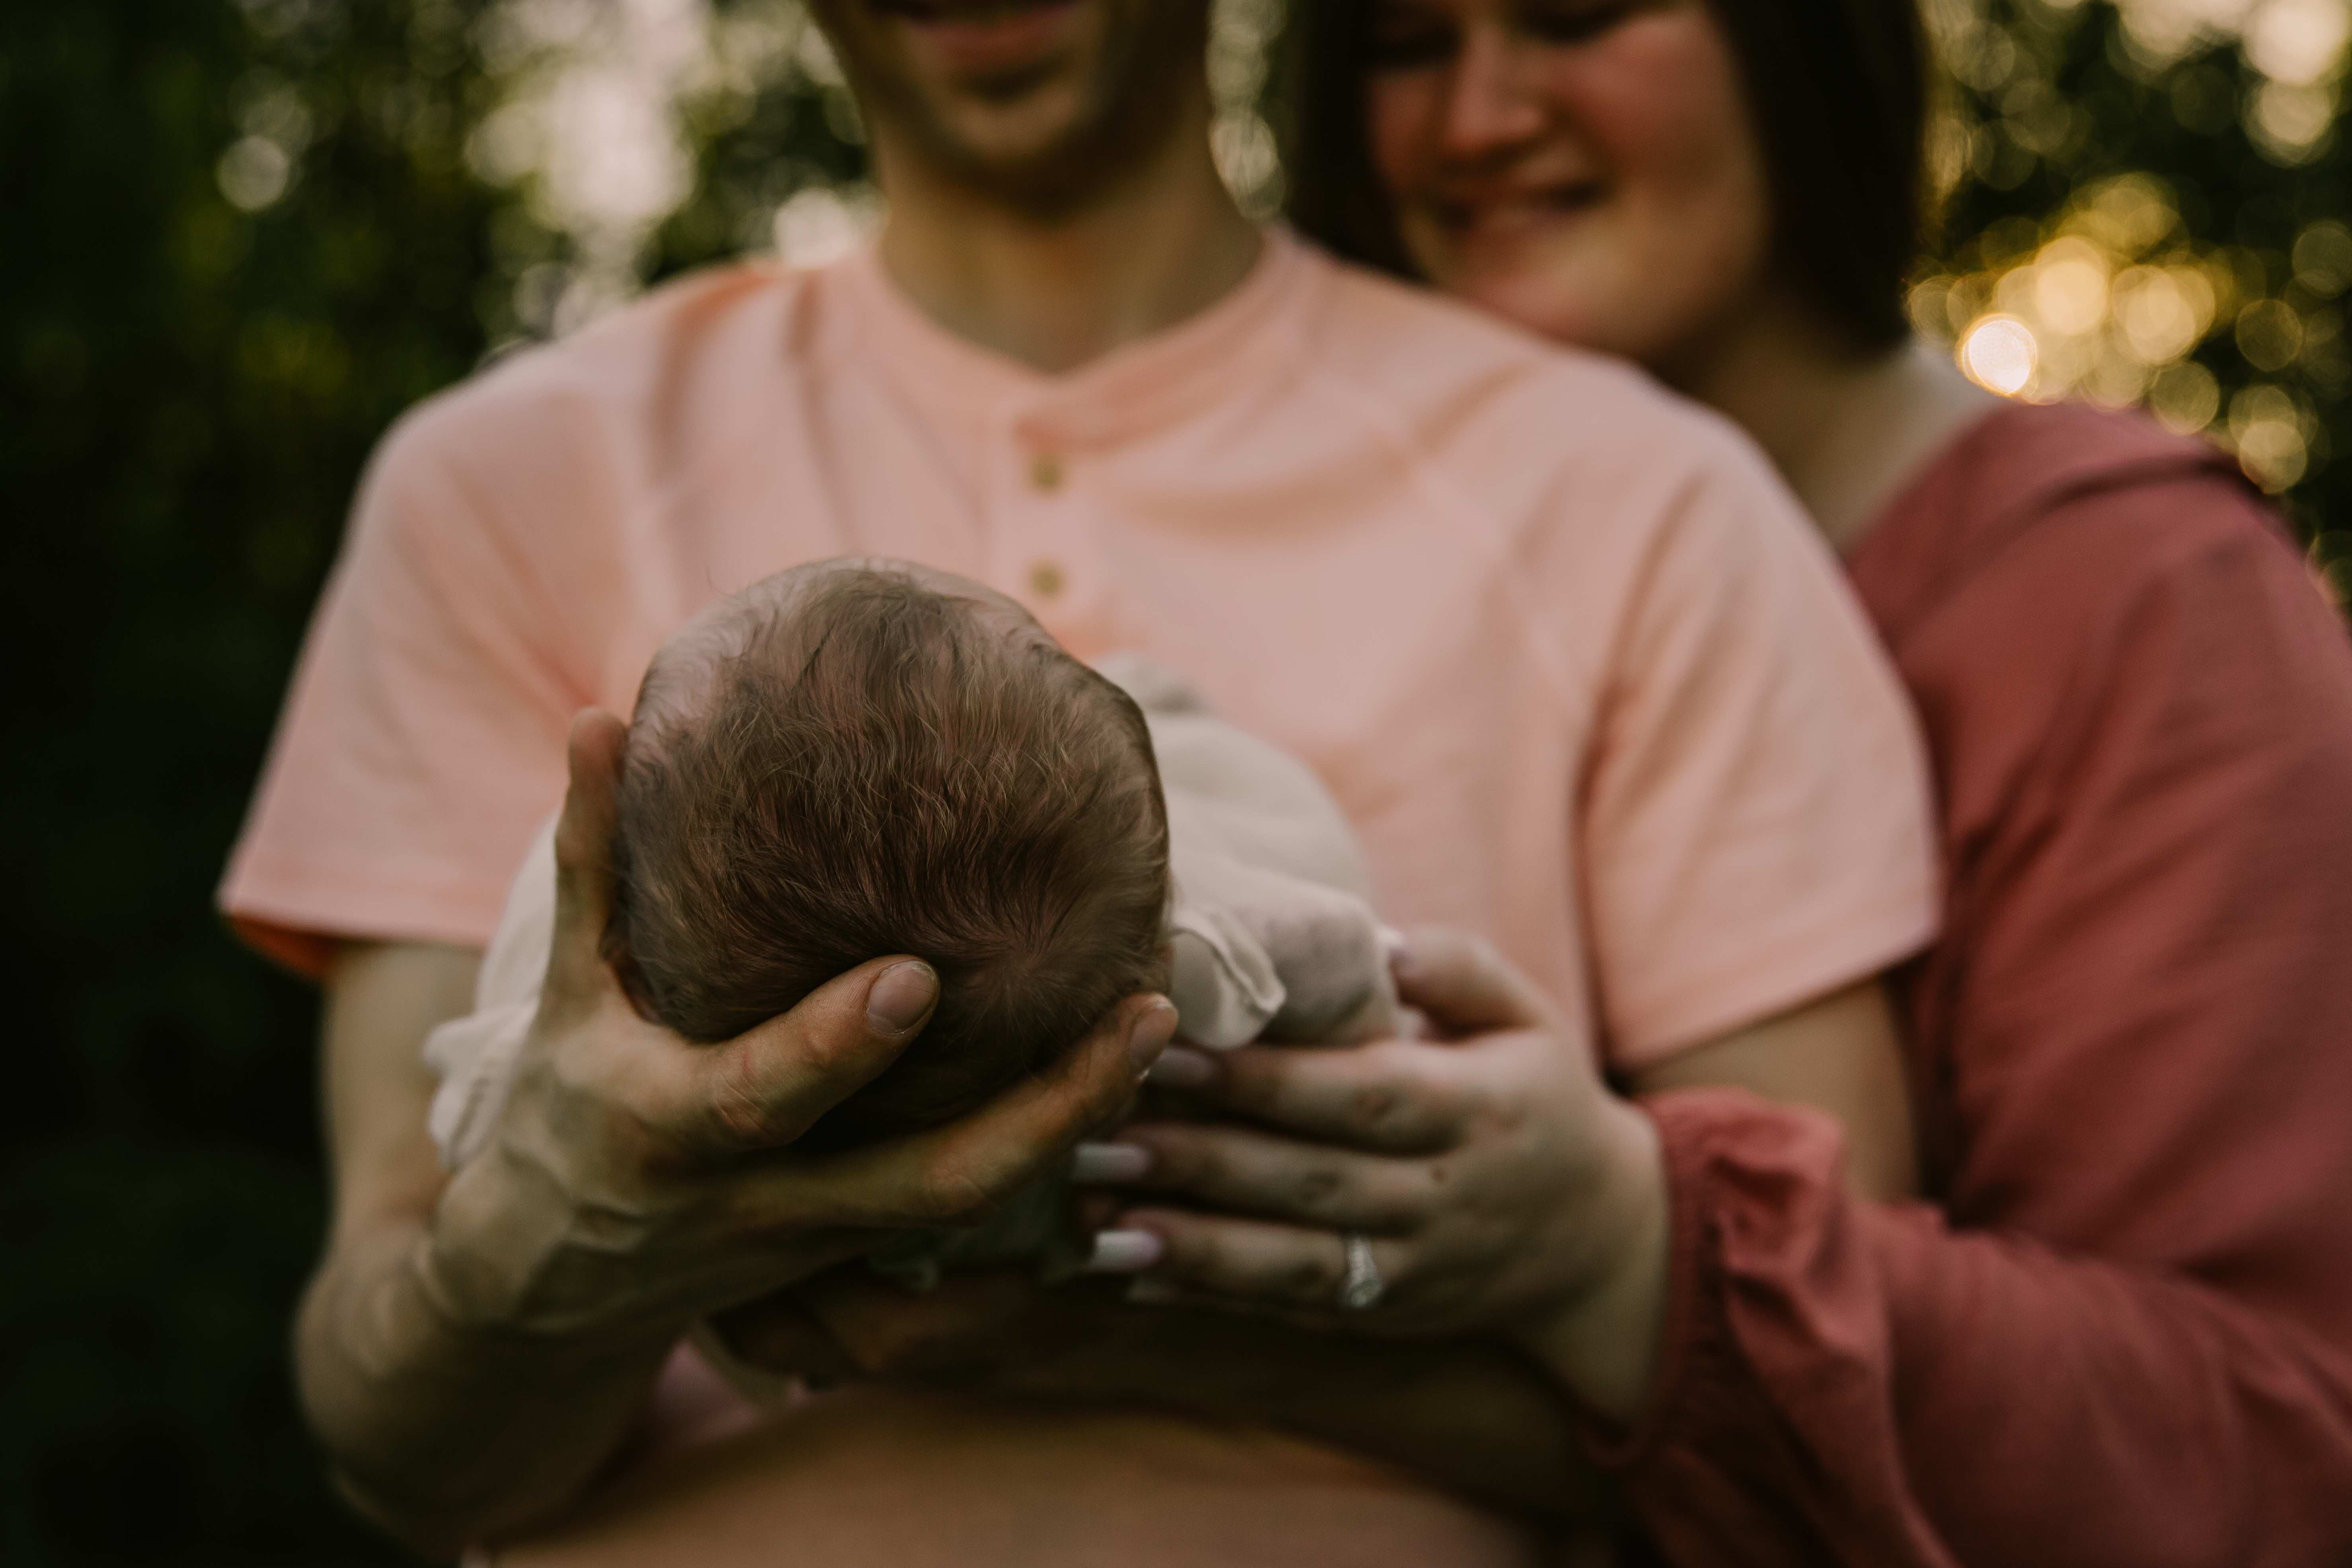 Parents holding newborn